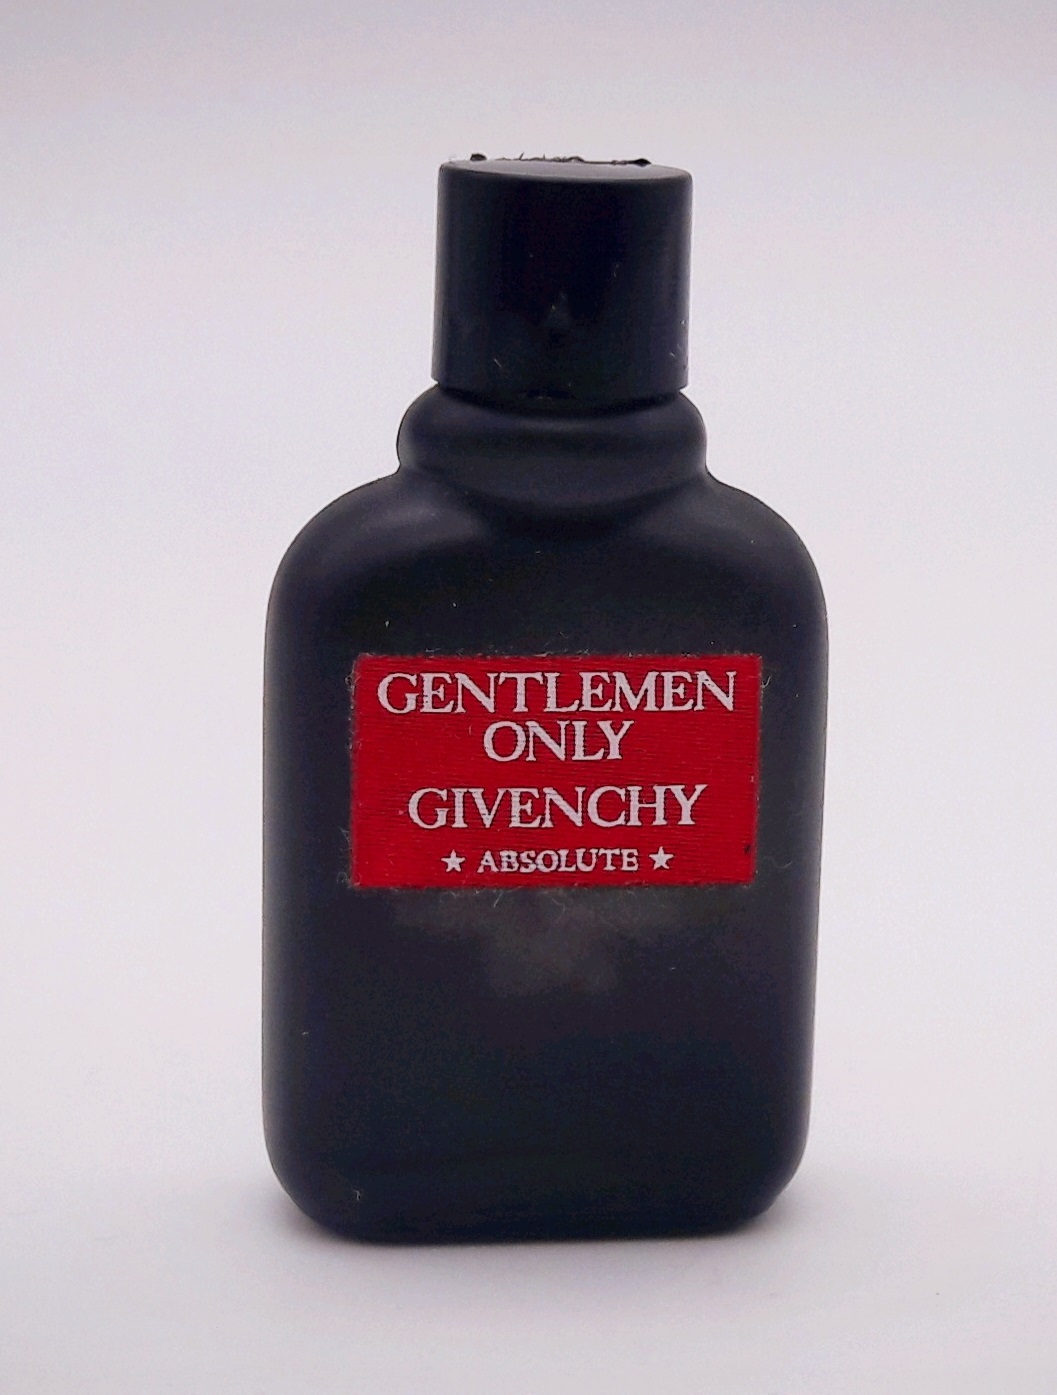 Givenchy Gentlemen only absolute 100 ml тестер. Gentleman миниатюра. Миниатюра живанши.